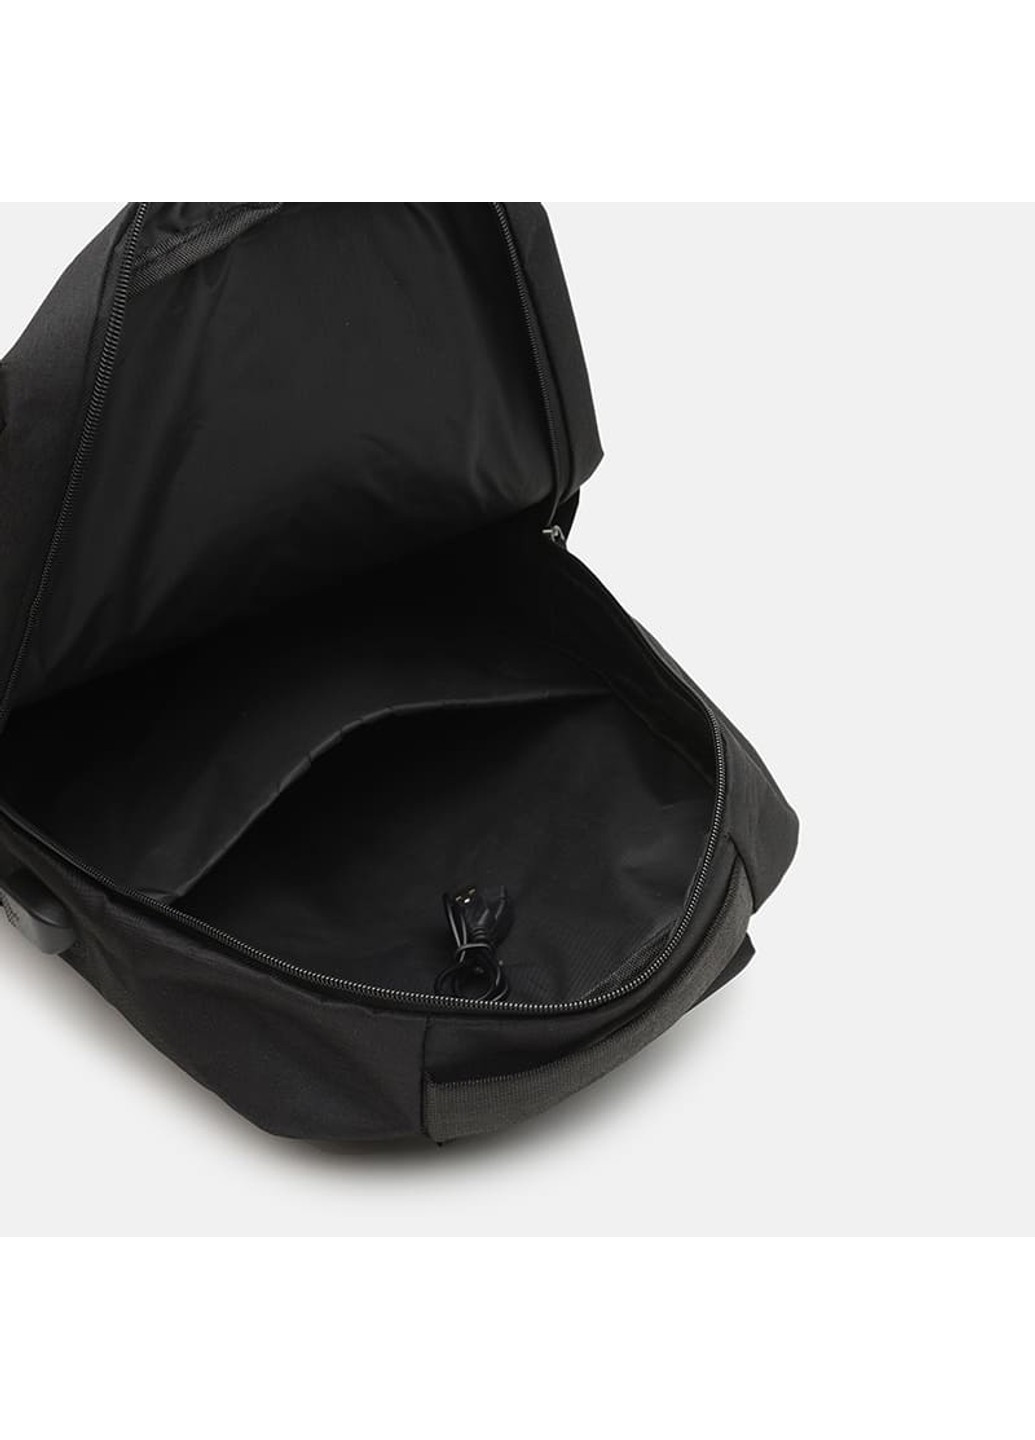 Рюкзак + сумка C11083-black Monsen (266143073)